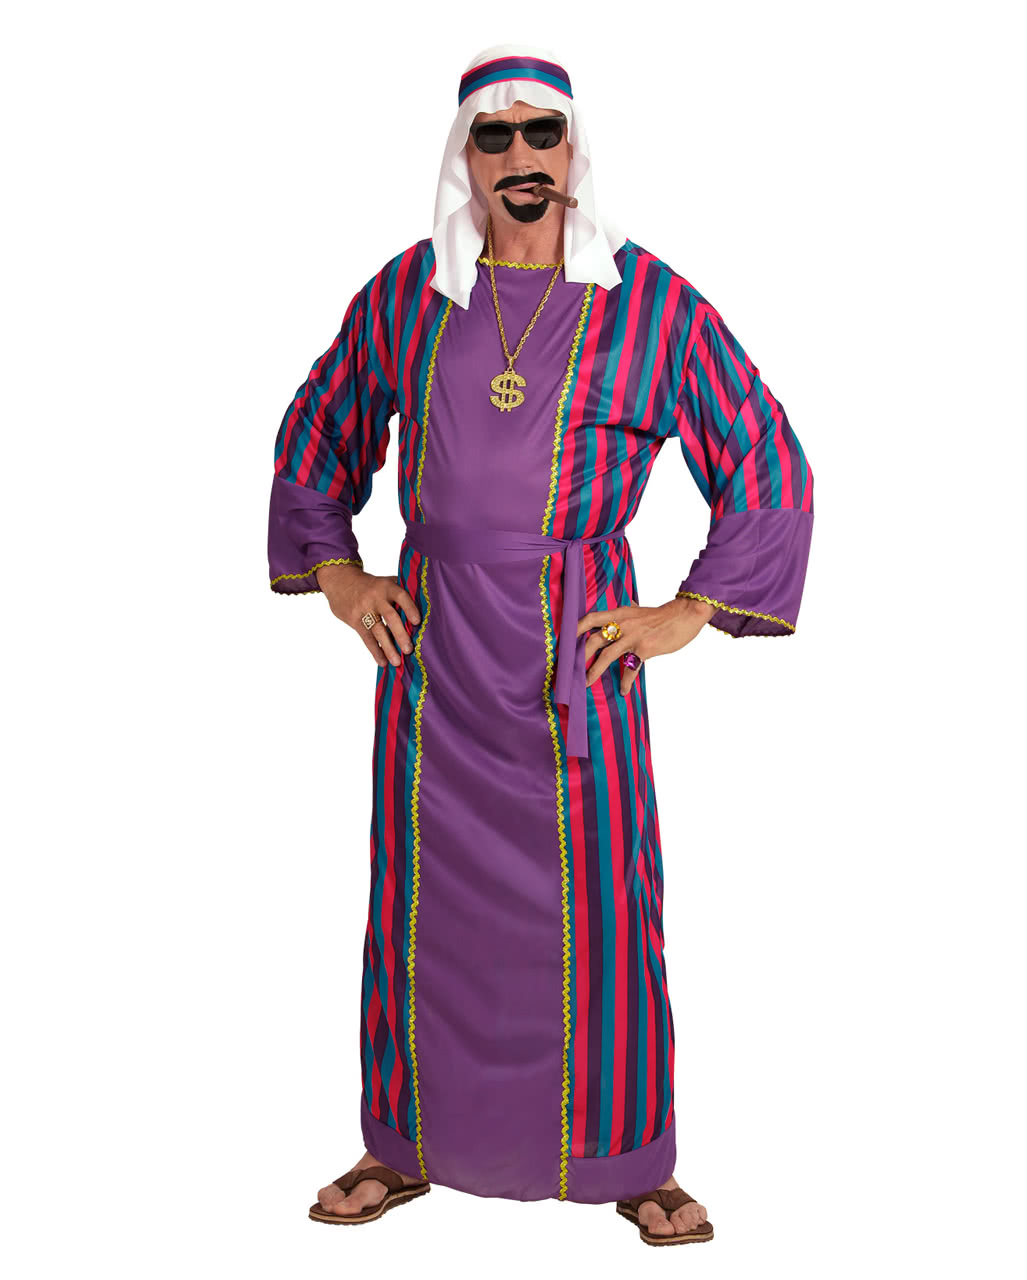 Details about  / Desert Prince Arabian Arab Sheik Sultan Fancy Dress Up Halloween Adult Costume